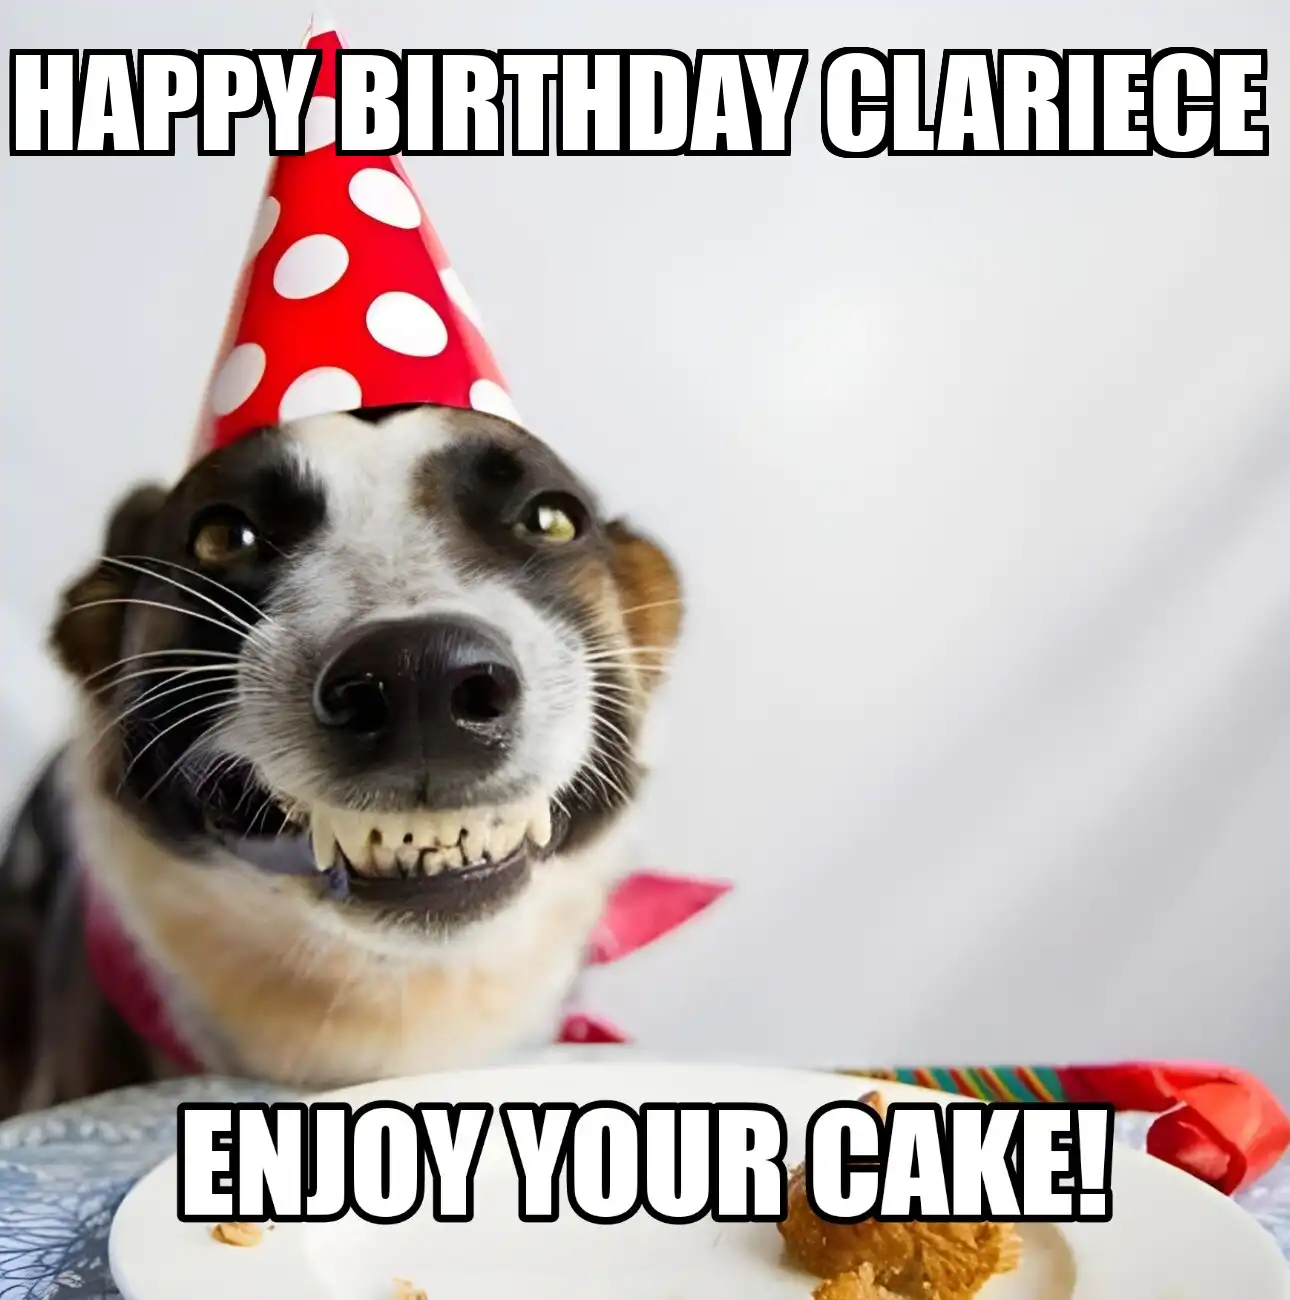 Happy Birthday Clariece Enjoy Your Cake Dog Meme